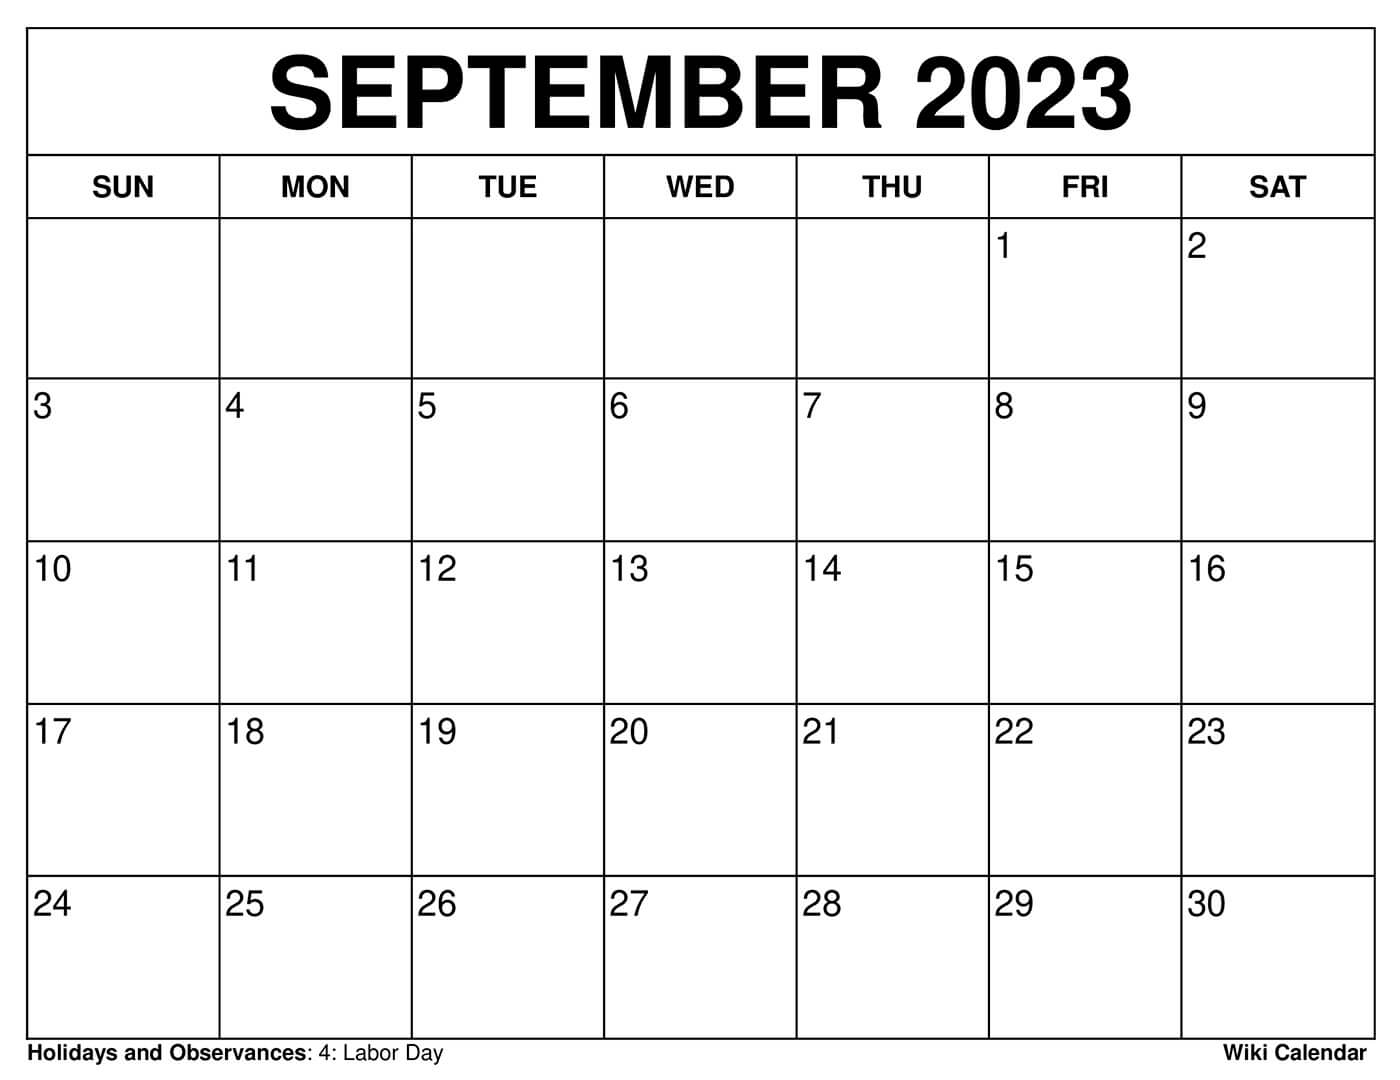 Sept 2022 Calendar Free Printable September 2022 Calendars - Wiki Calendar